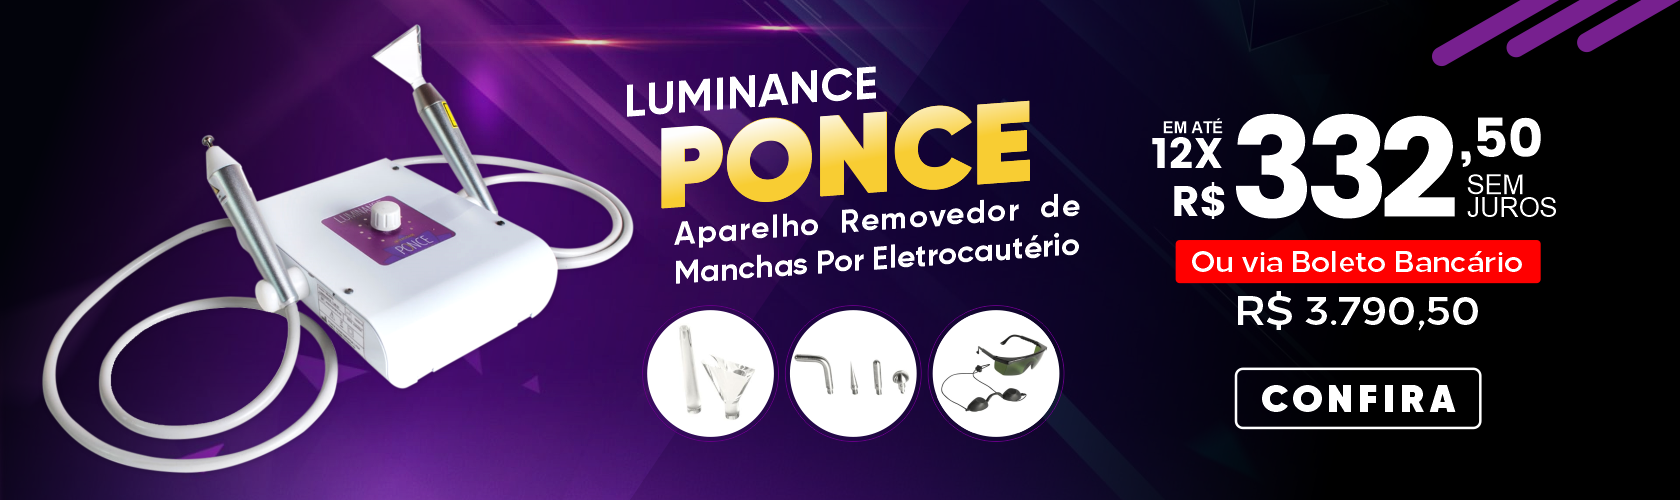 Luminance Ponce